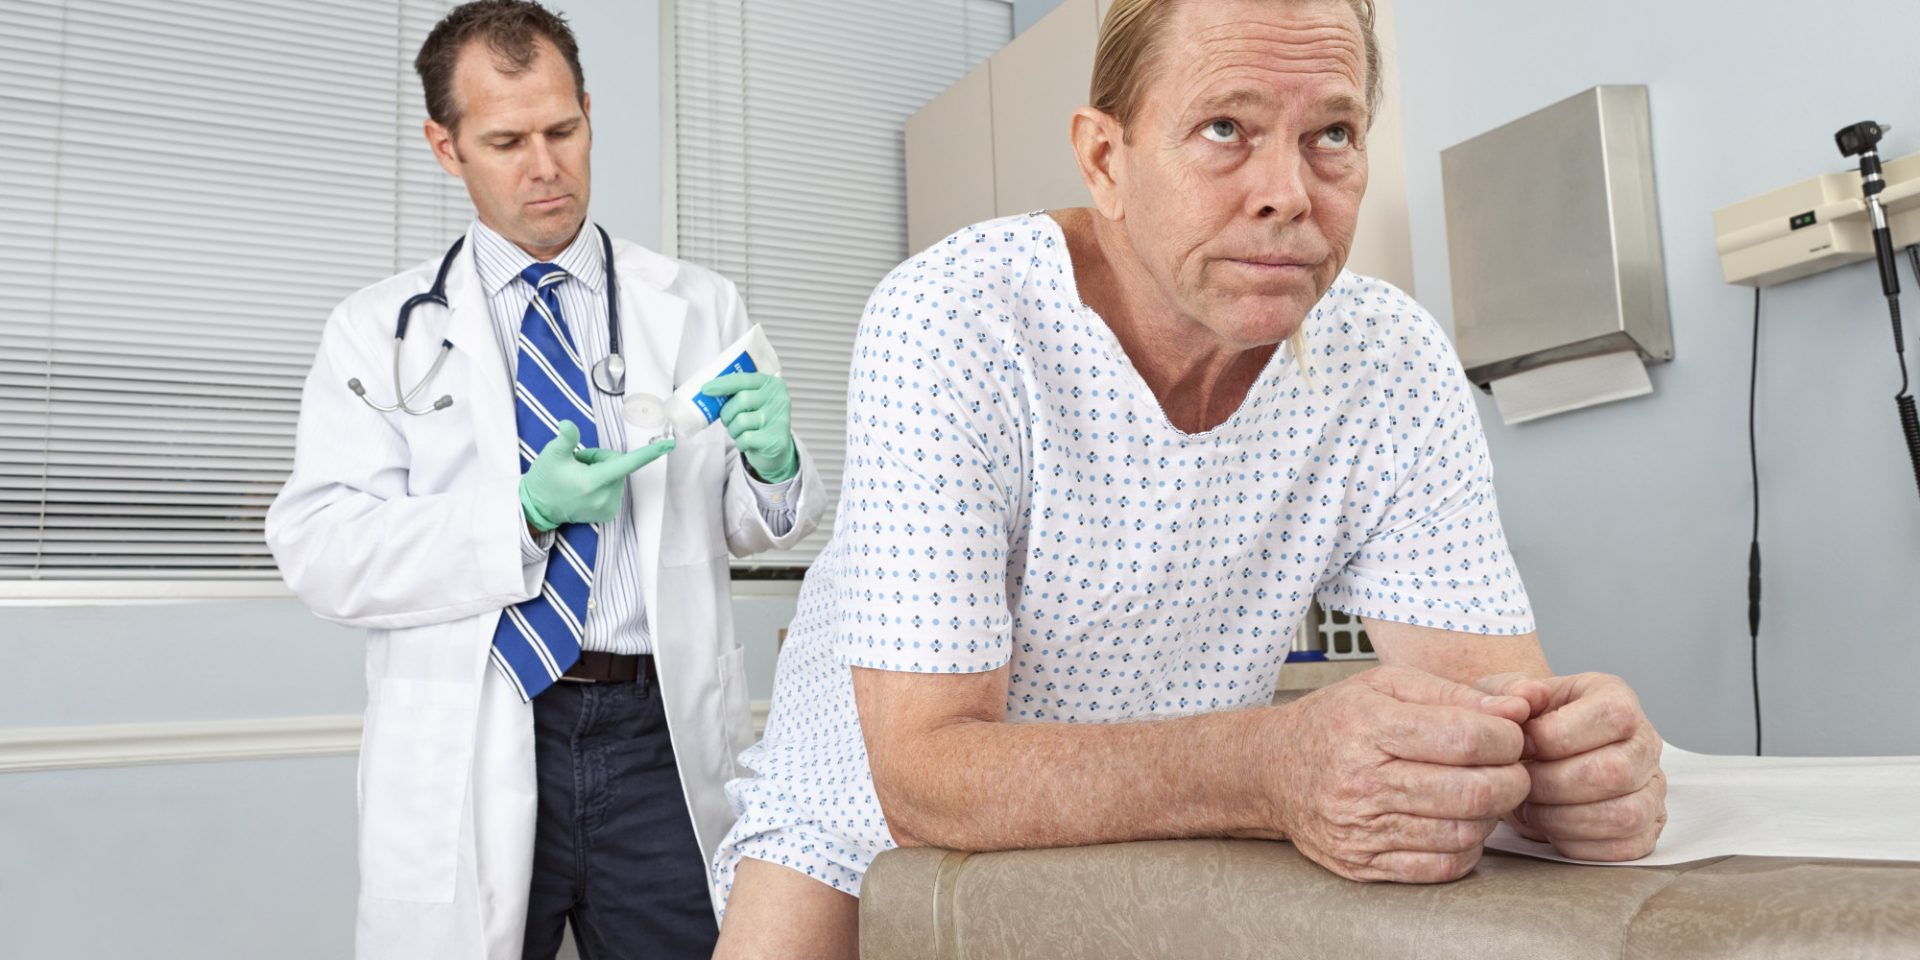 Does prostate massage increase PSA levels?